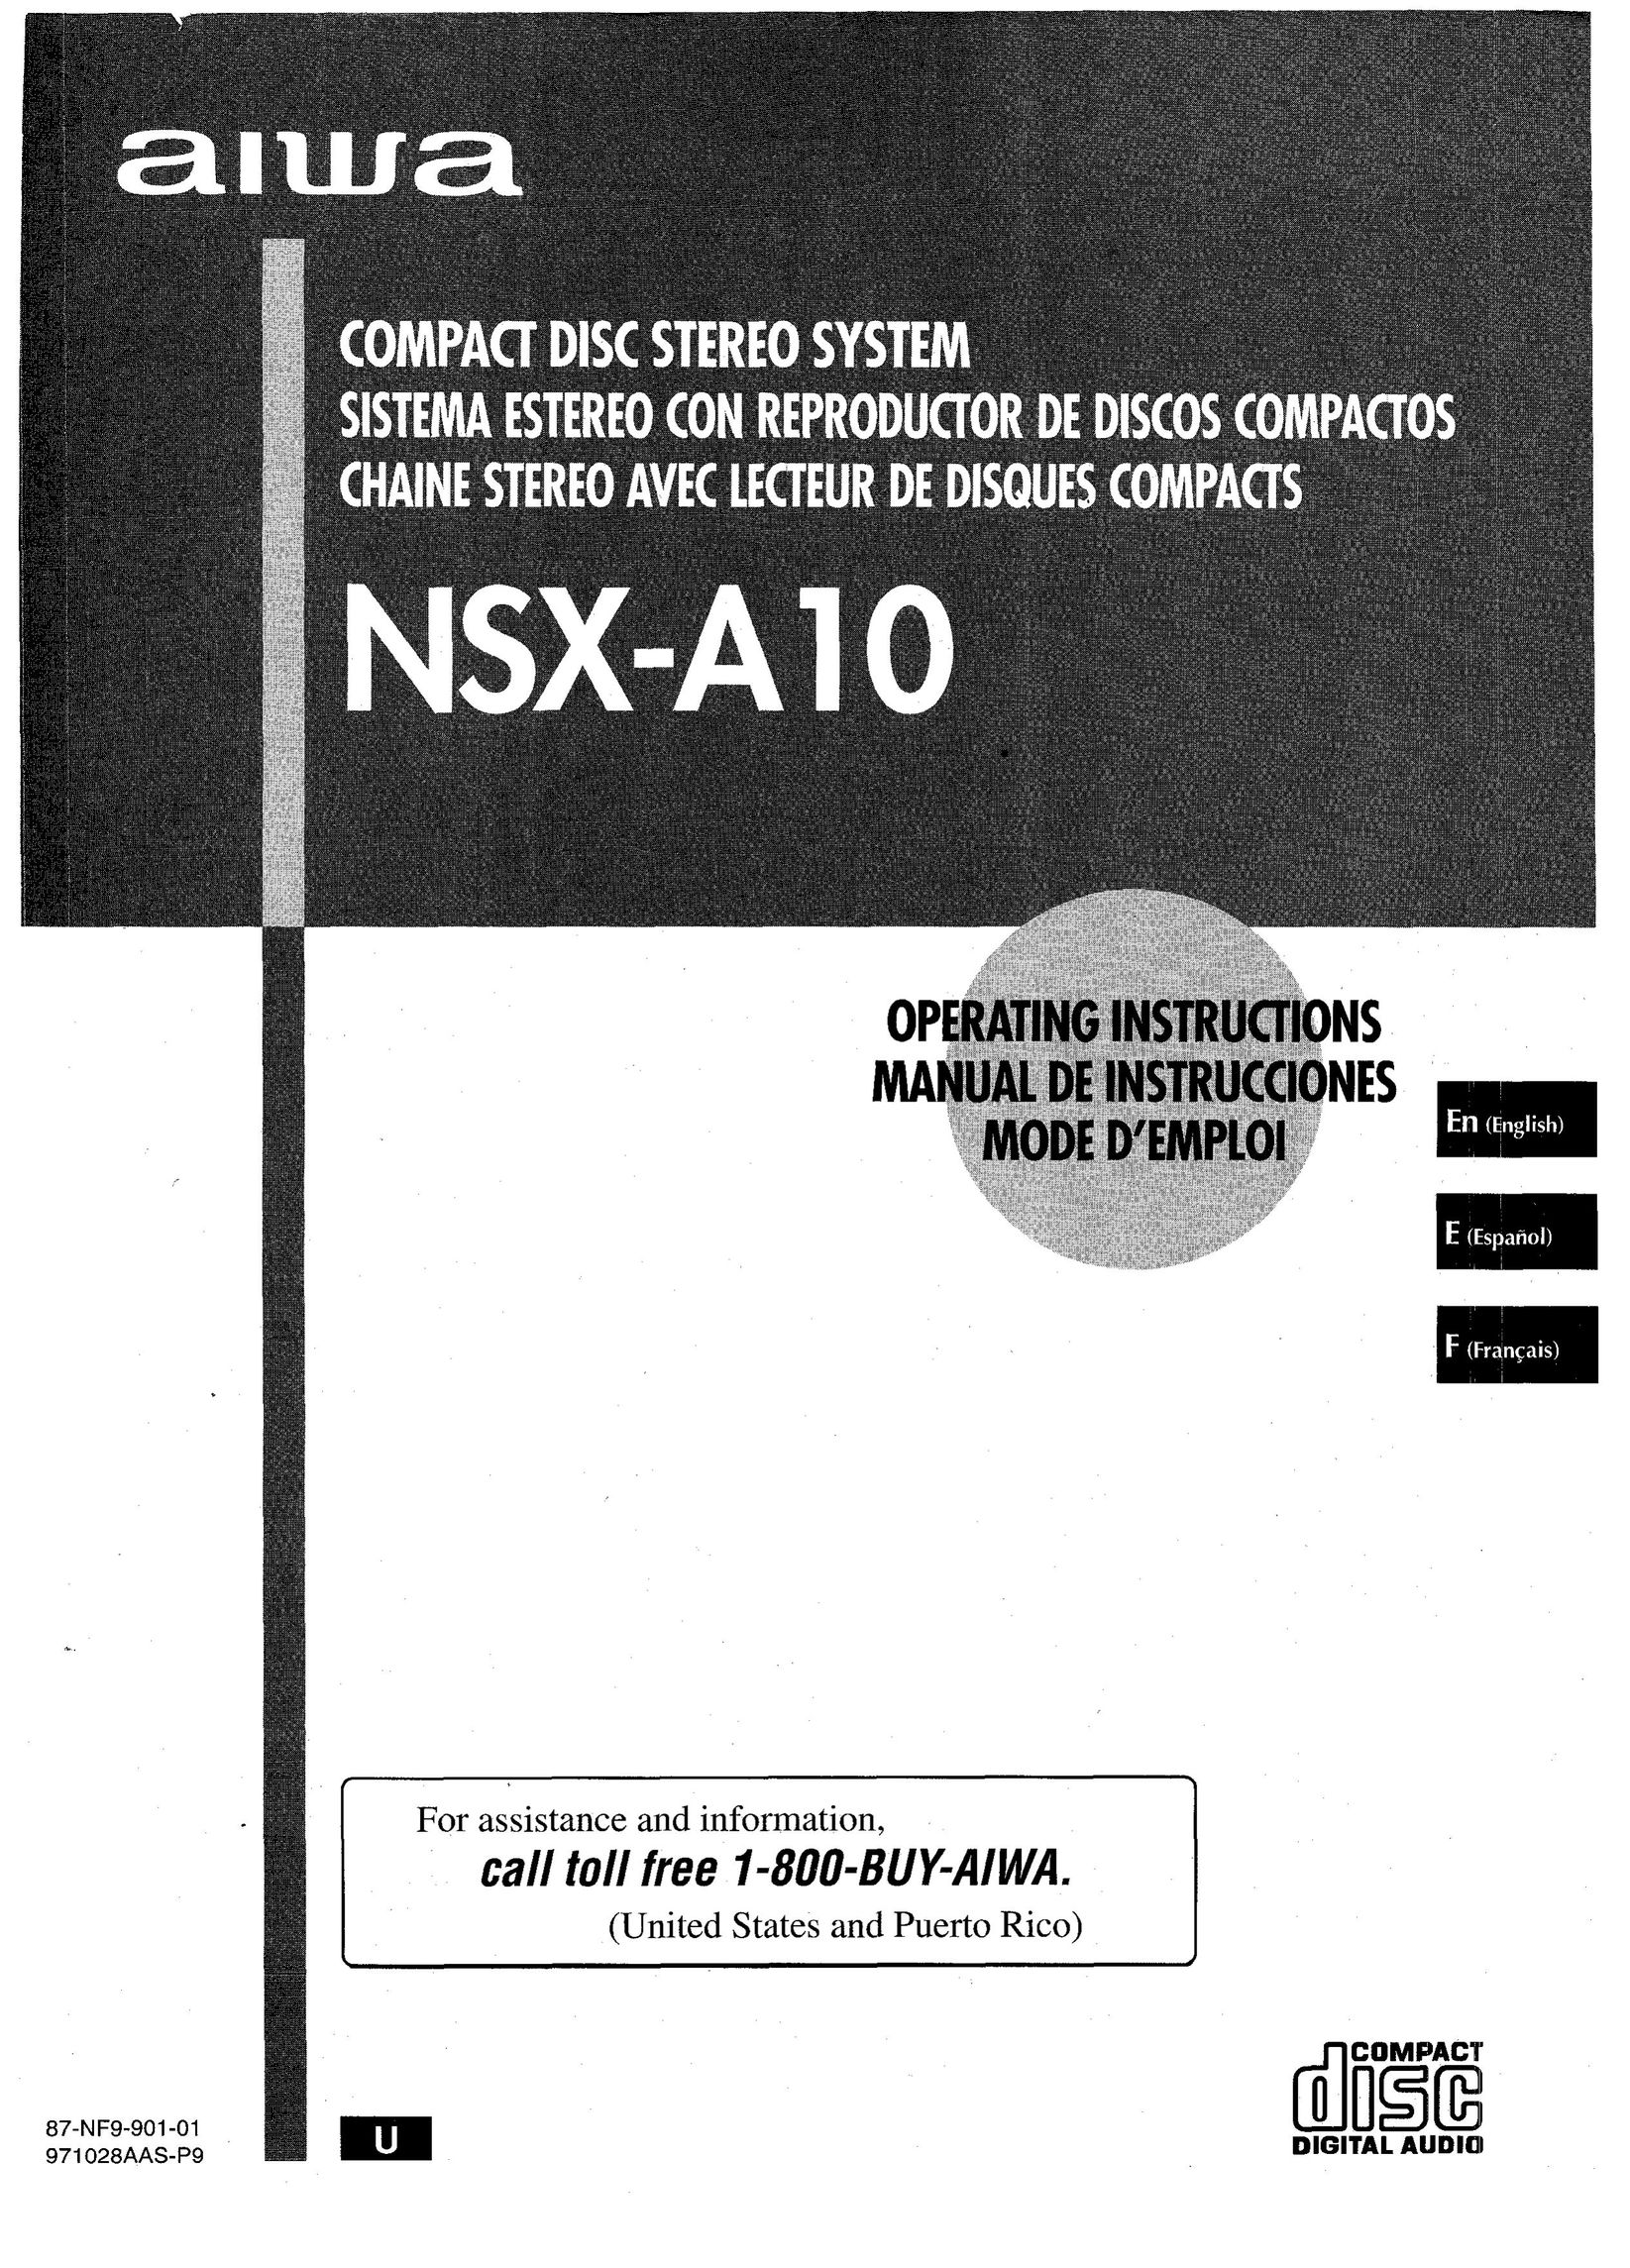 Aiwa NSX-A10 CD Player User Manual